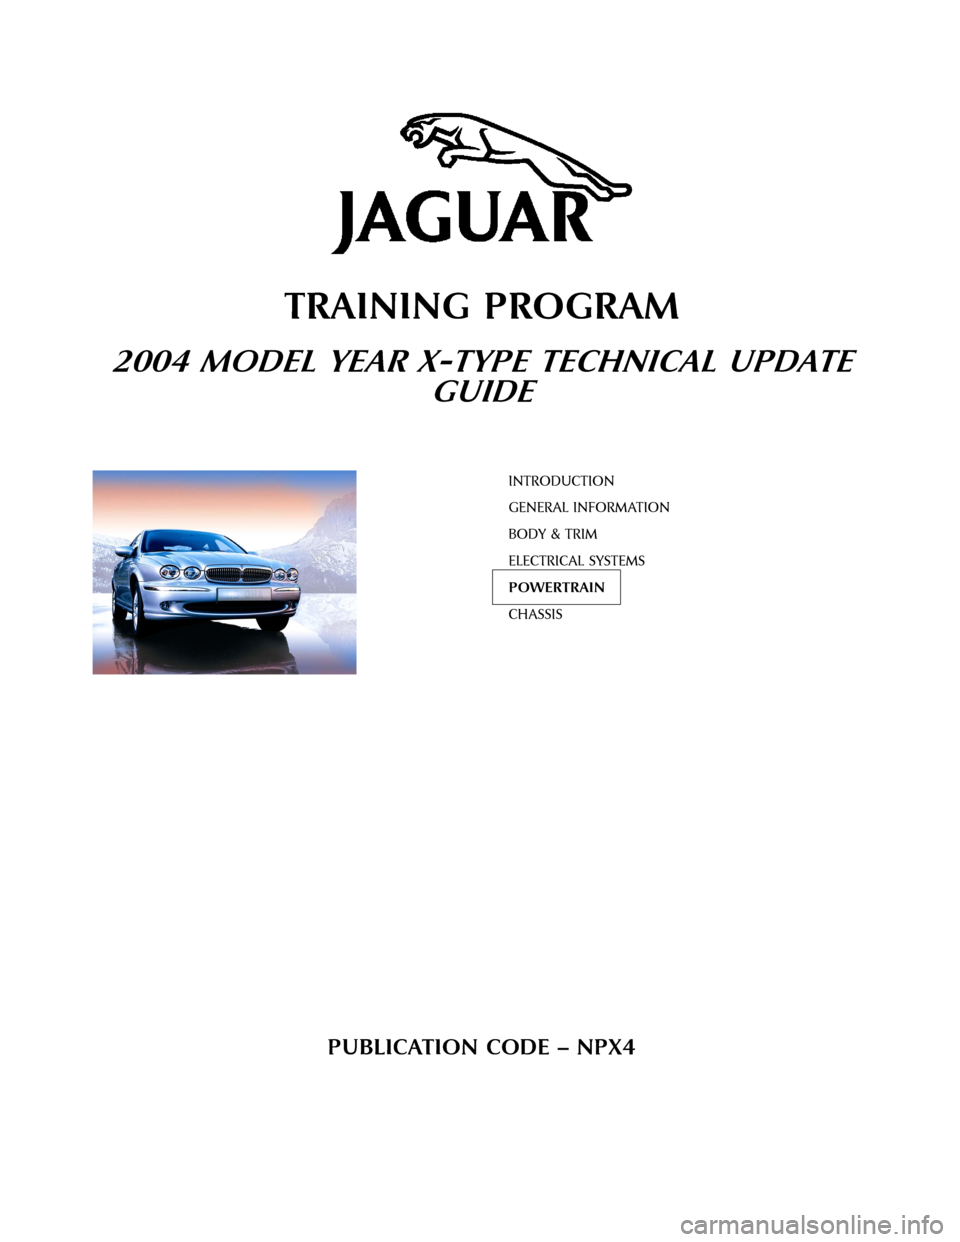 JAGUAR X TYPE 2004 1.G Technical Guide Update  	
  	
 
	 
 


	
	
 	
	
	
  

 

1


 
   